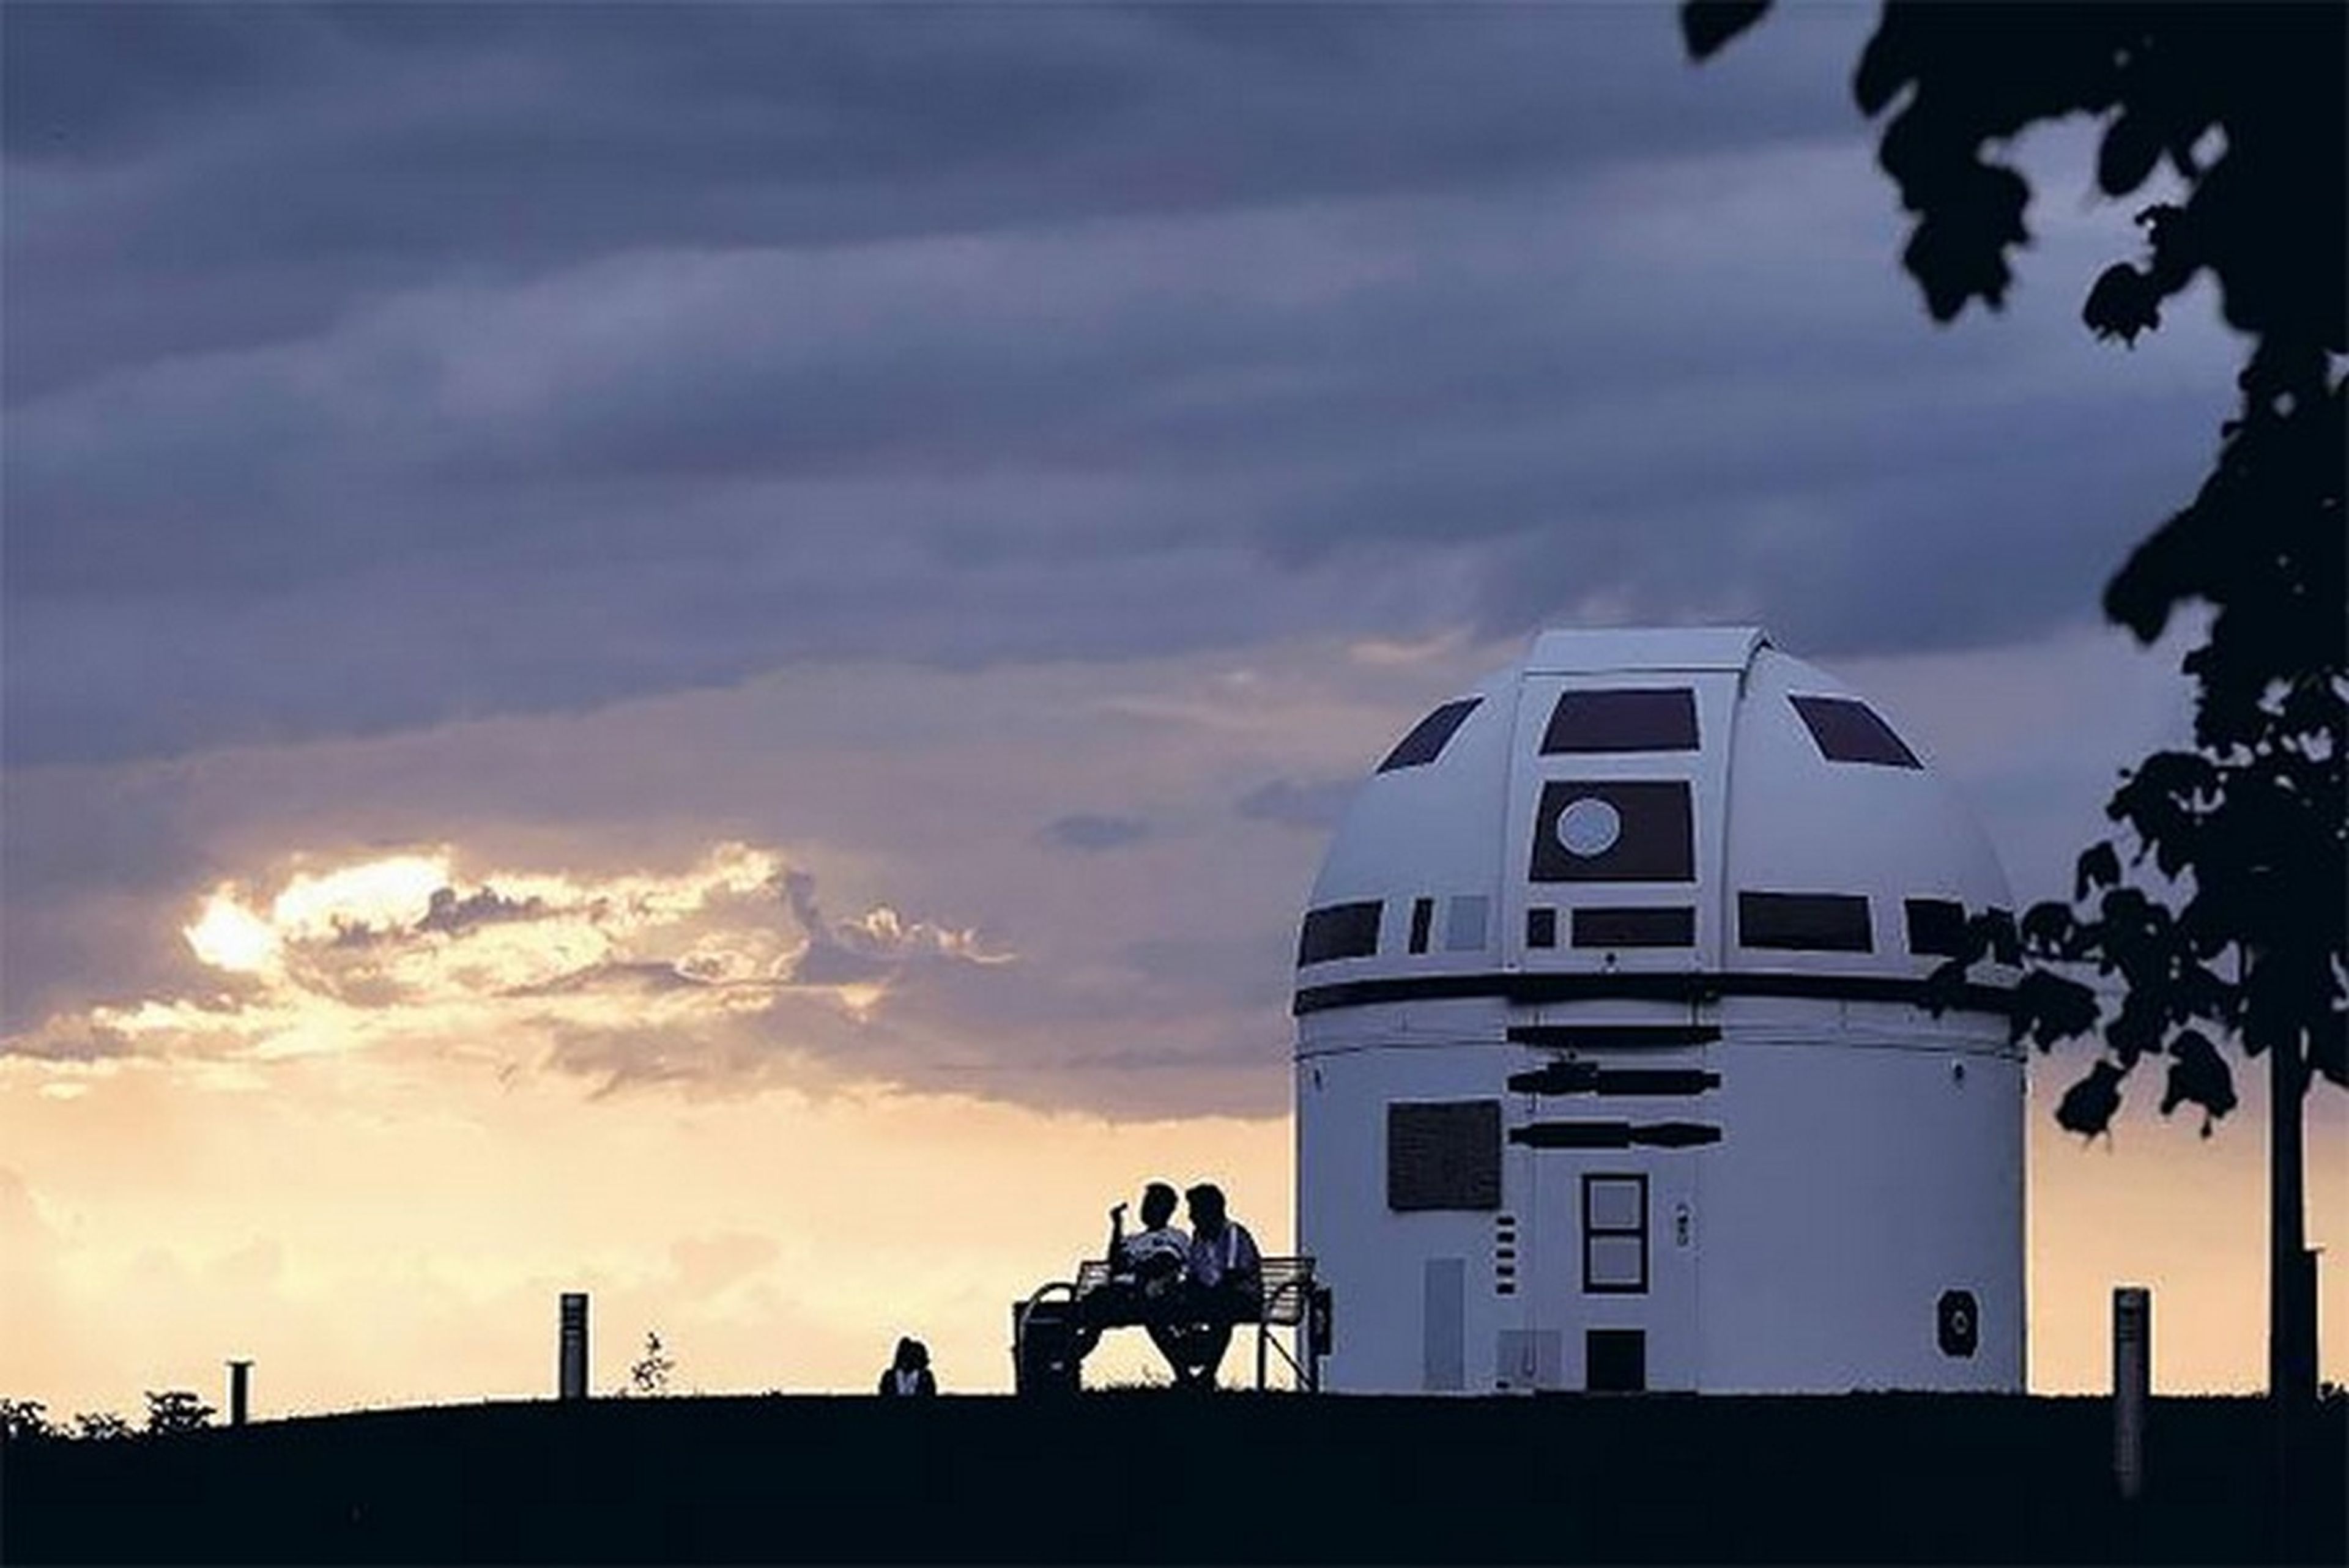 Est inmenso R2-D2 es un observatorio espacial